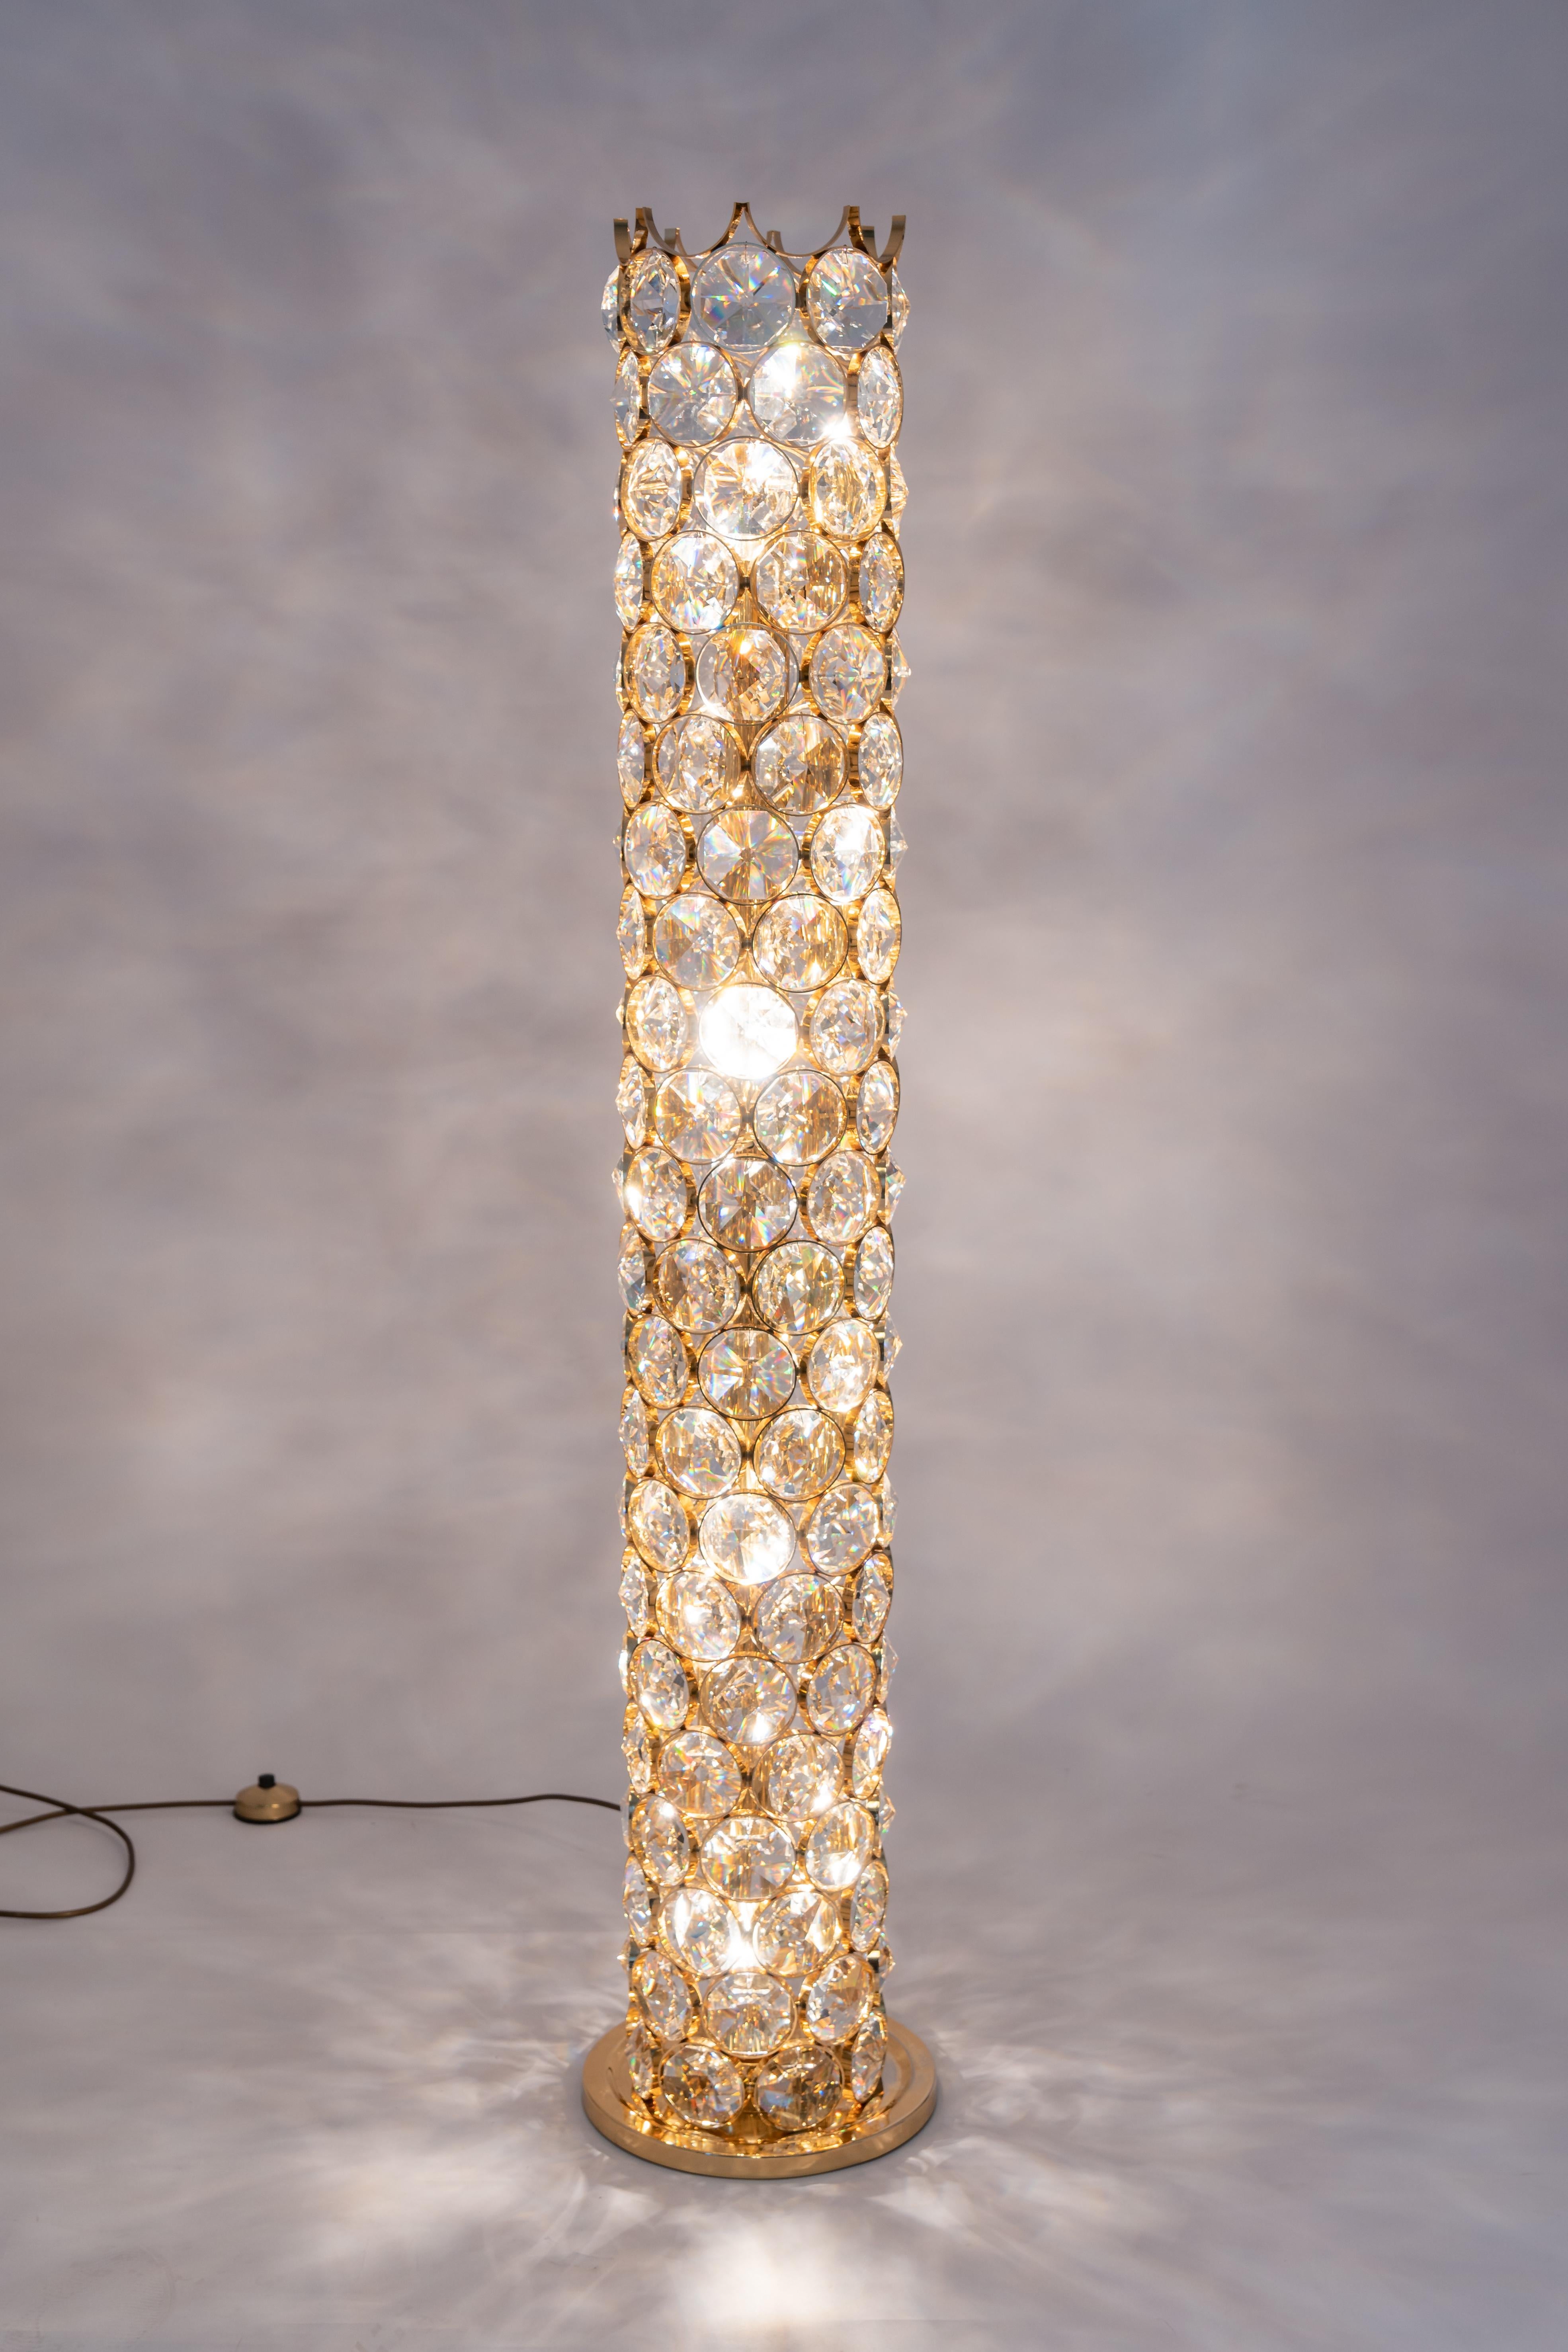 Exquisite Gilt Jewel Floor Lamp Sciolari Design by Palwa, Germany, 1960s For Sale 5